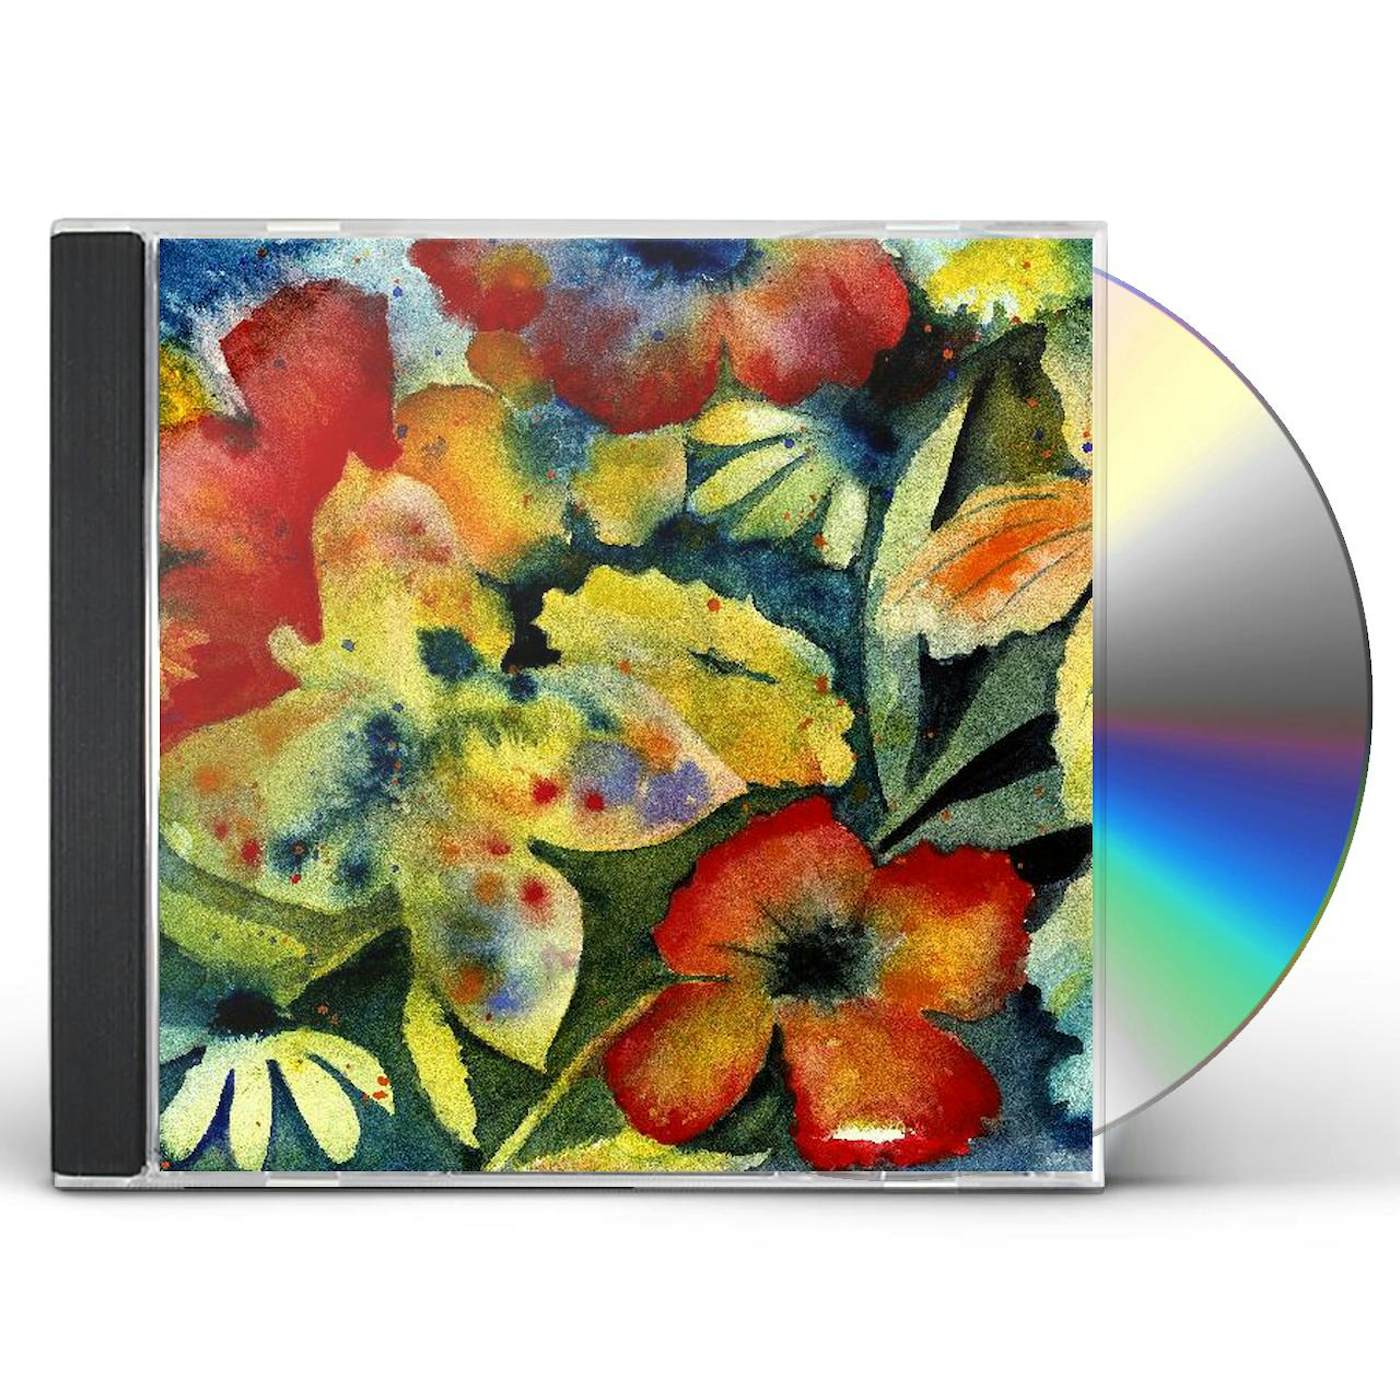 Adrianne Lenker Songs and Instrumentals 2x12 Vinyl (Black) - Big Thief